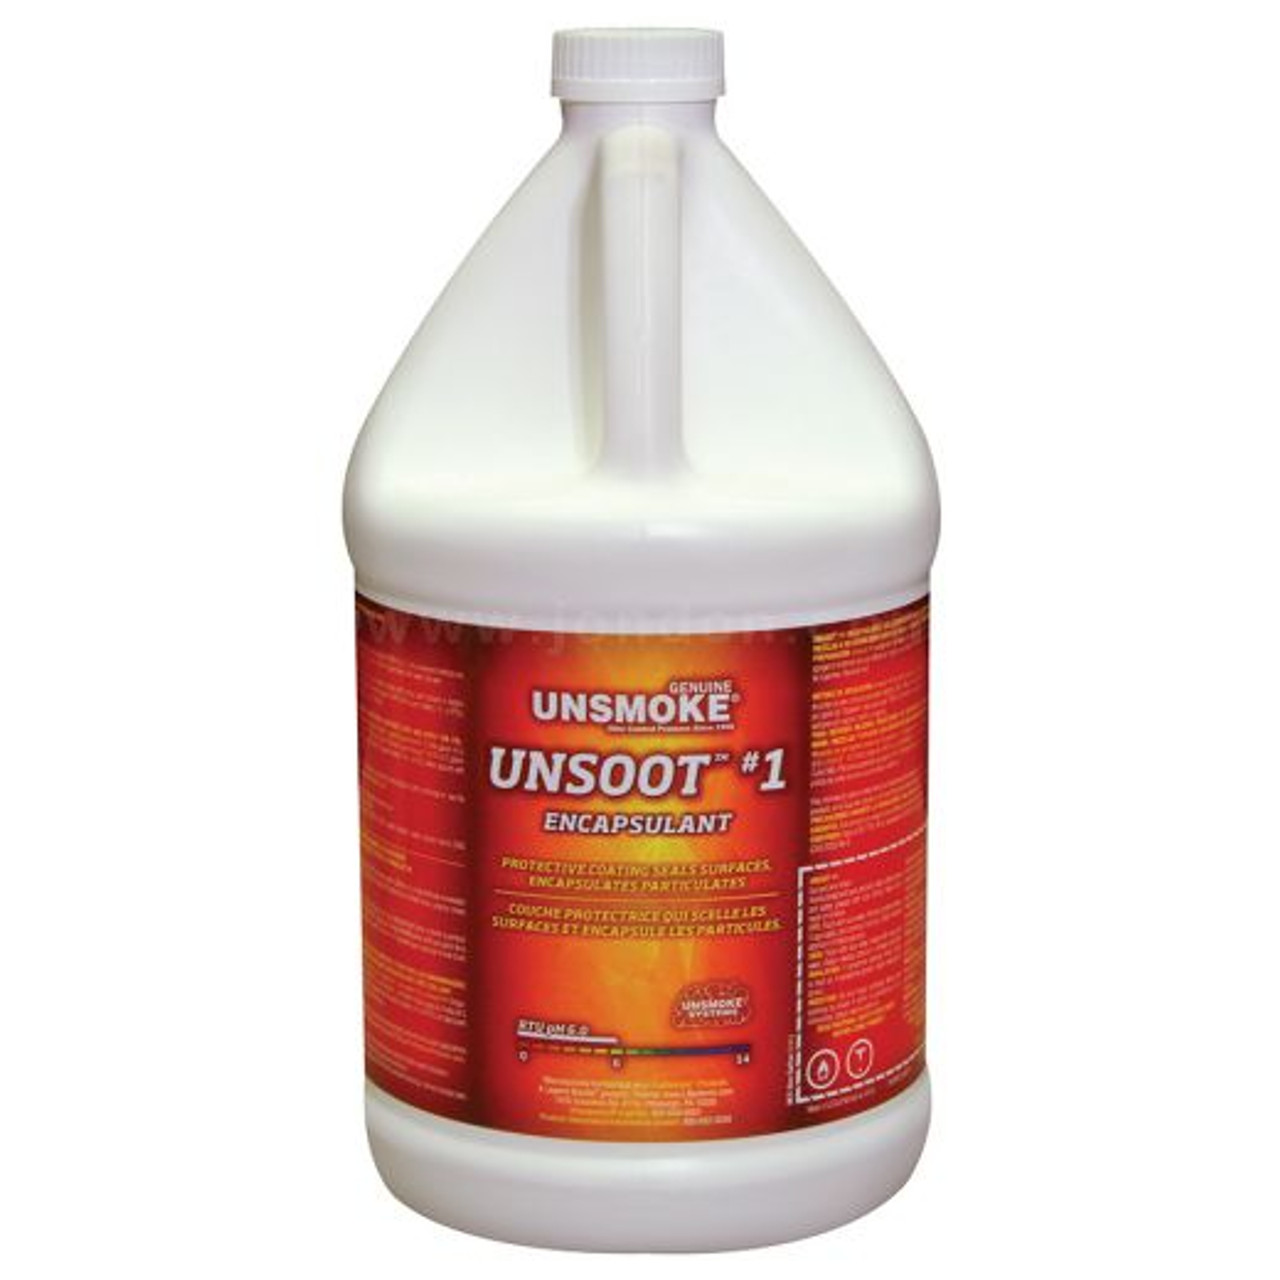 Unsmoke Unsoot #1 Encapsulant - 1gal